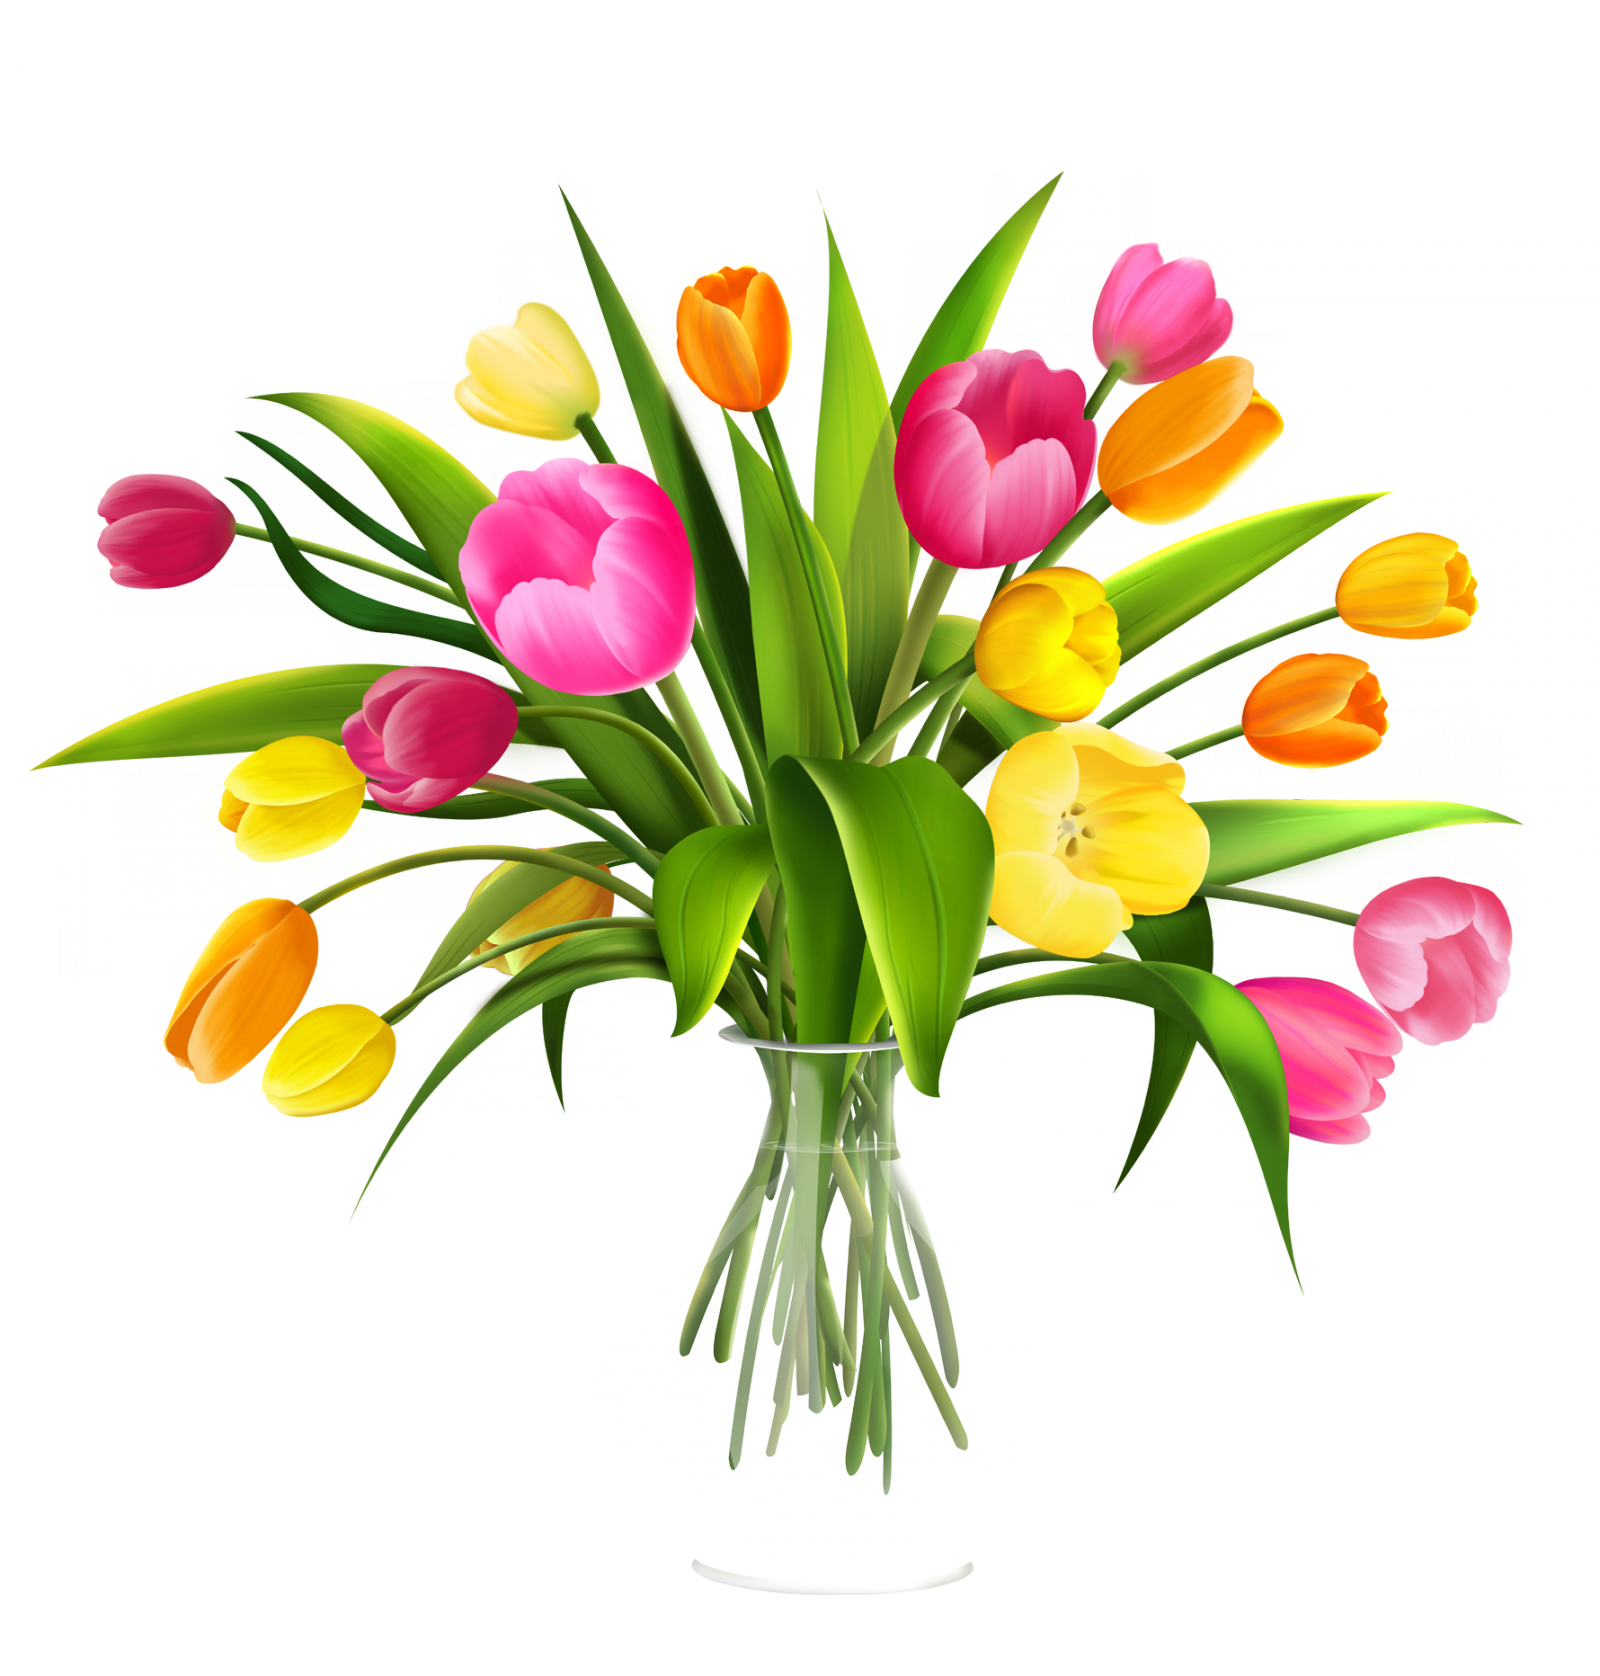 Vase Clipart